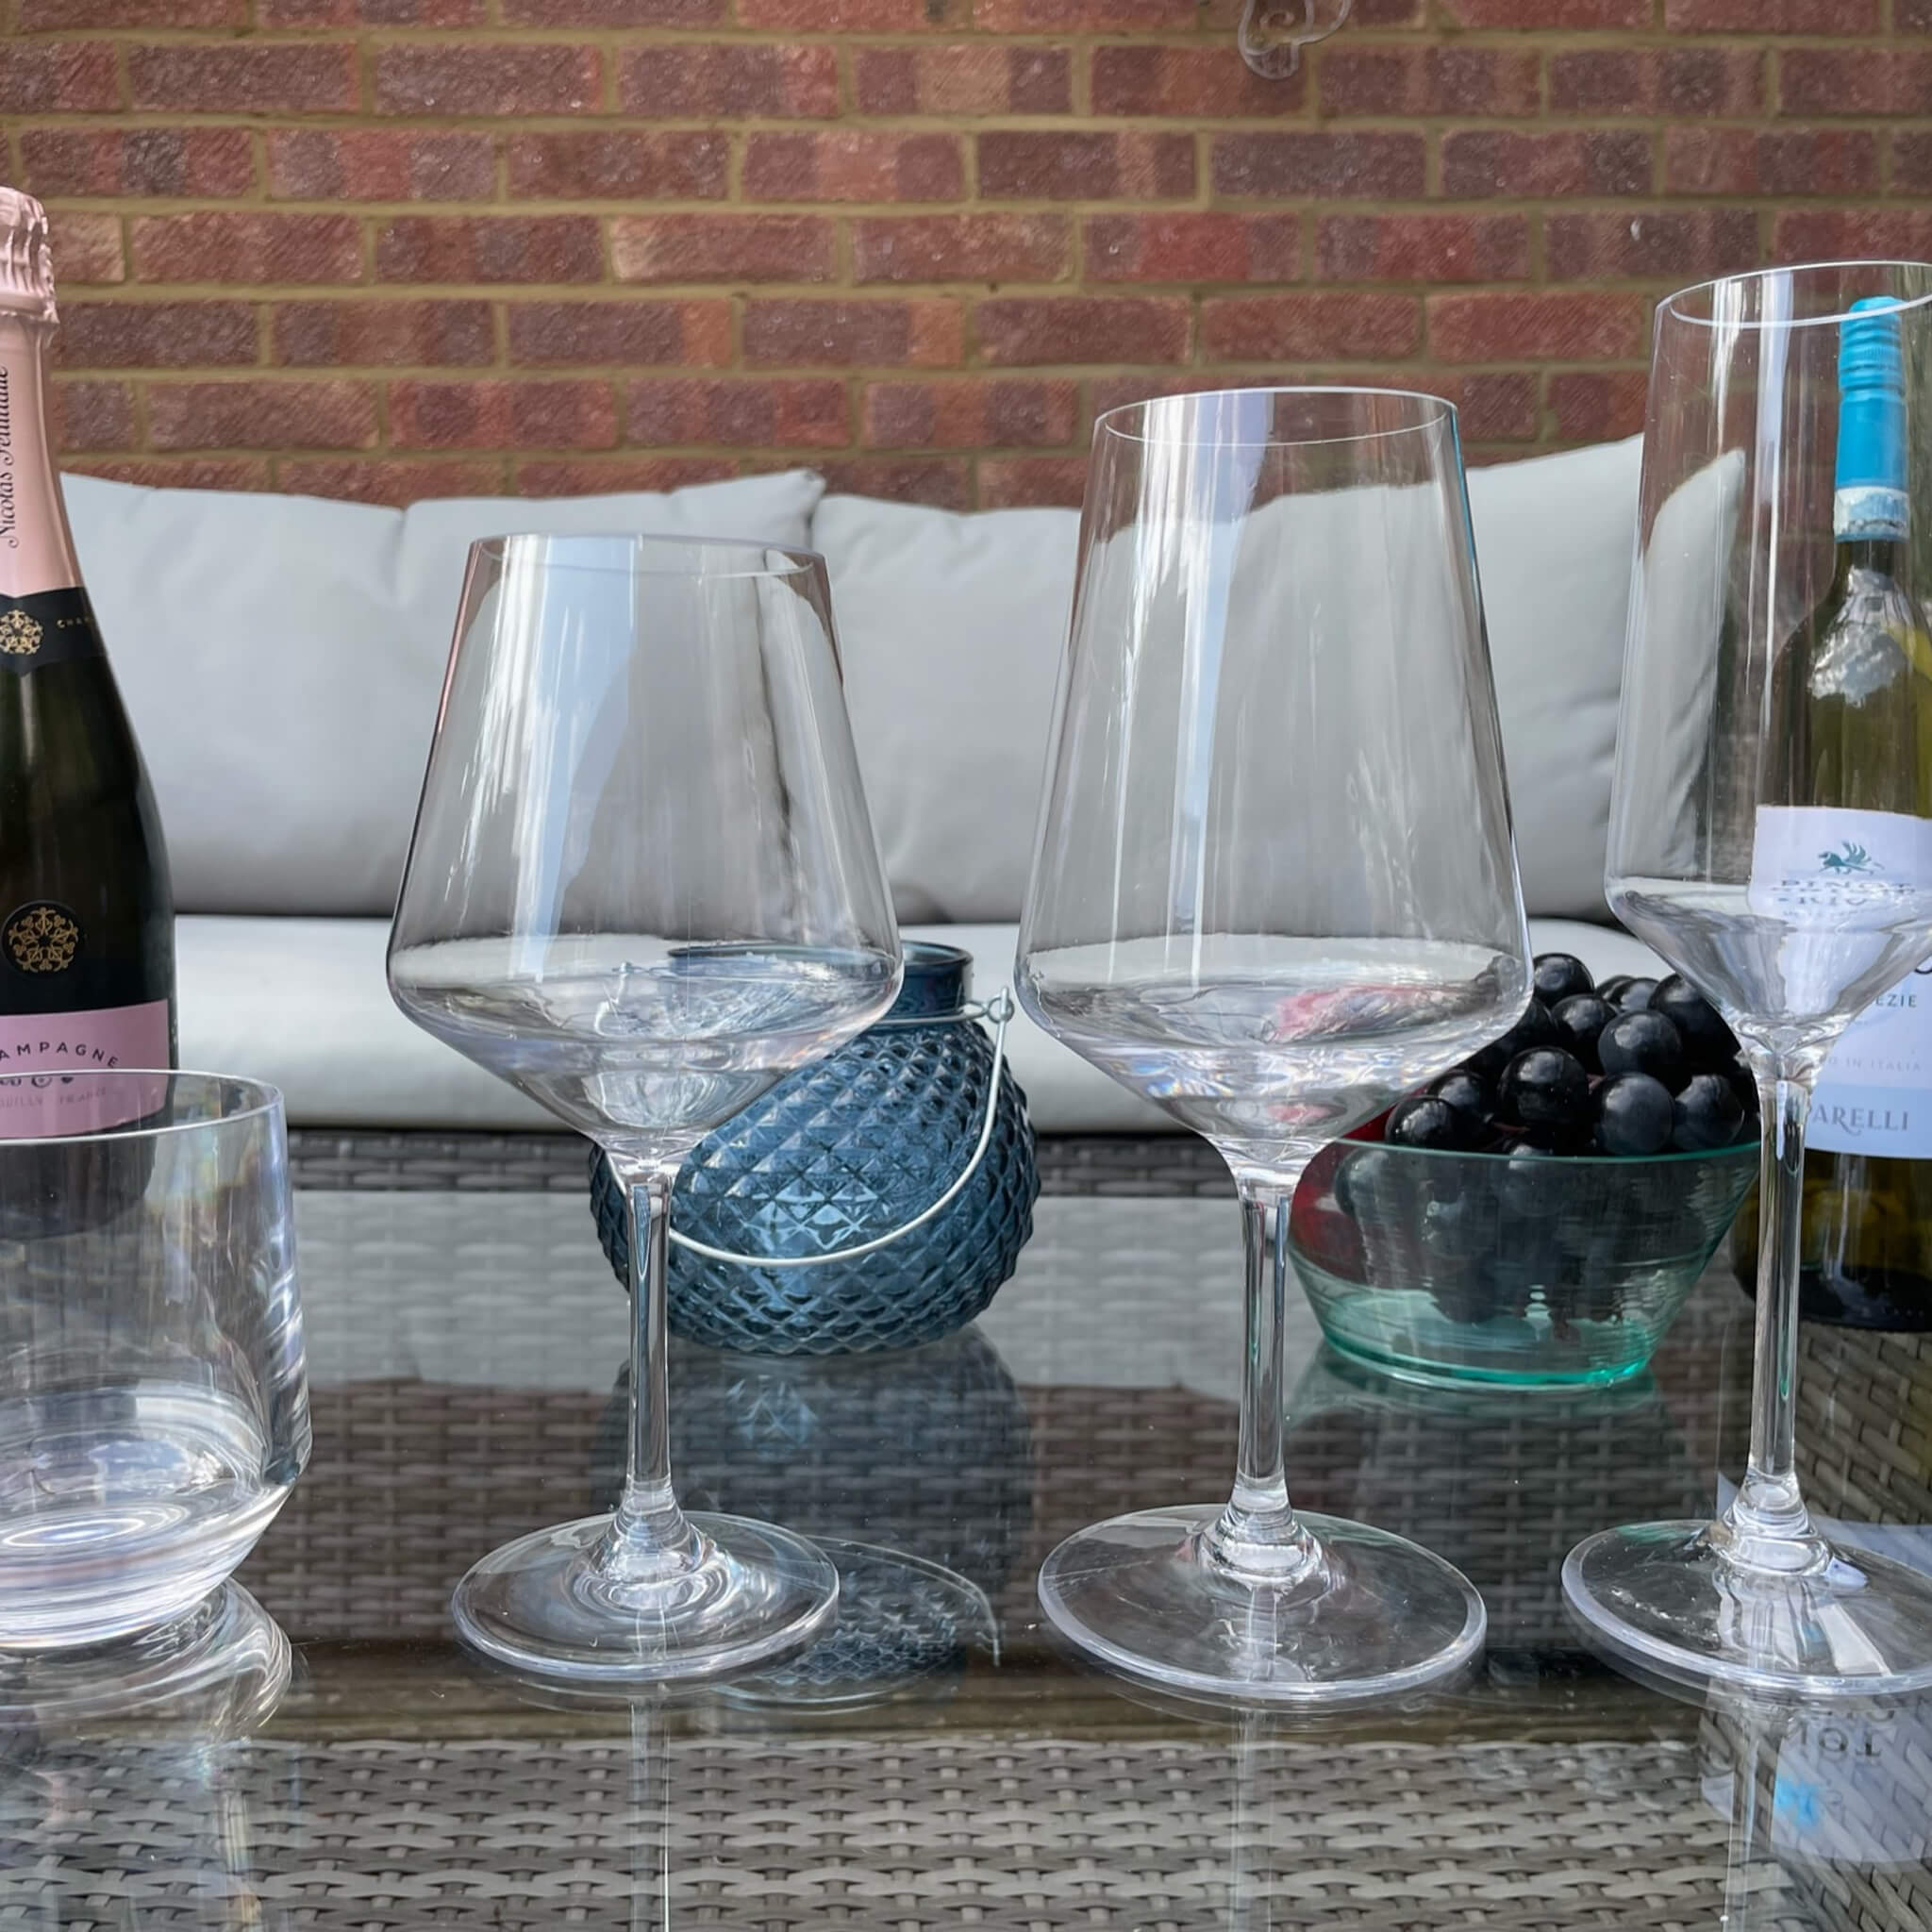 Savoy Wine Glasses (Set of 2) - Alfresco Dining Company